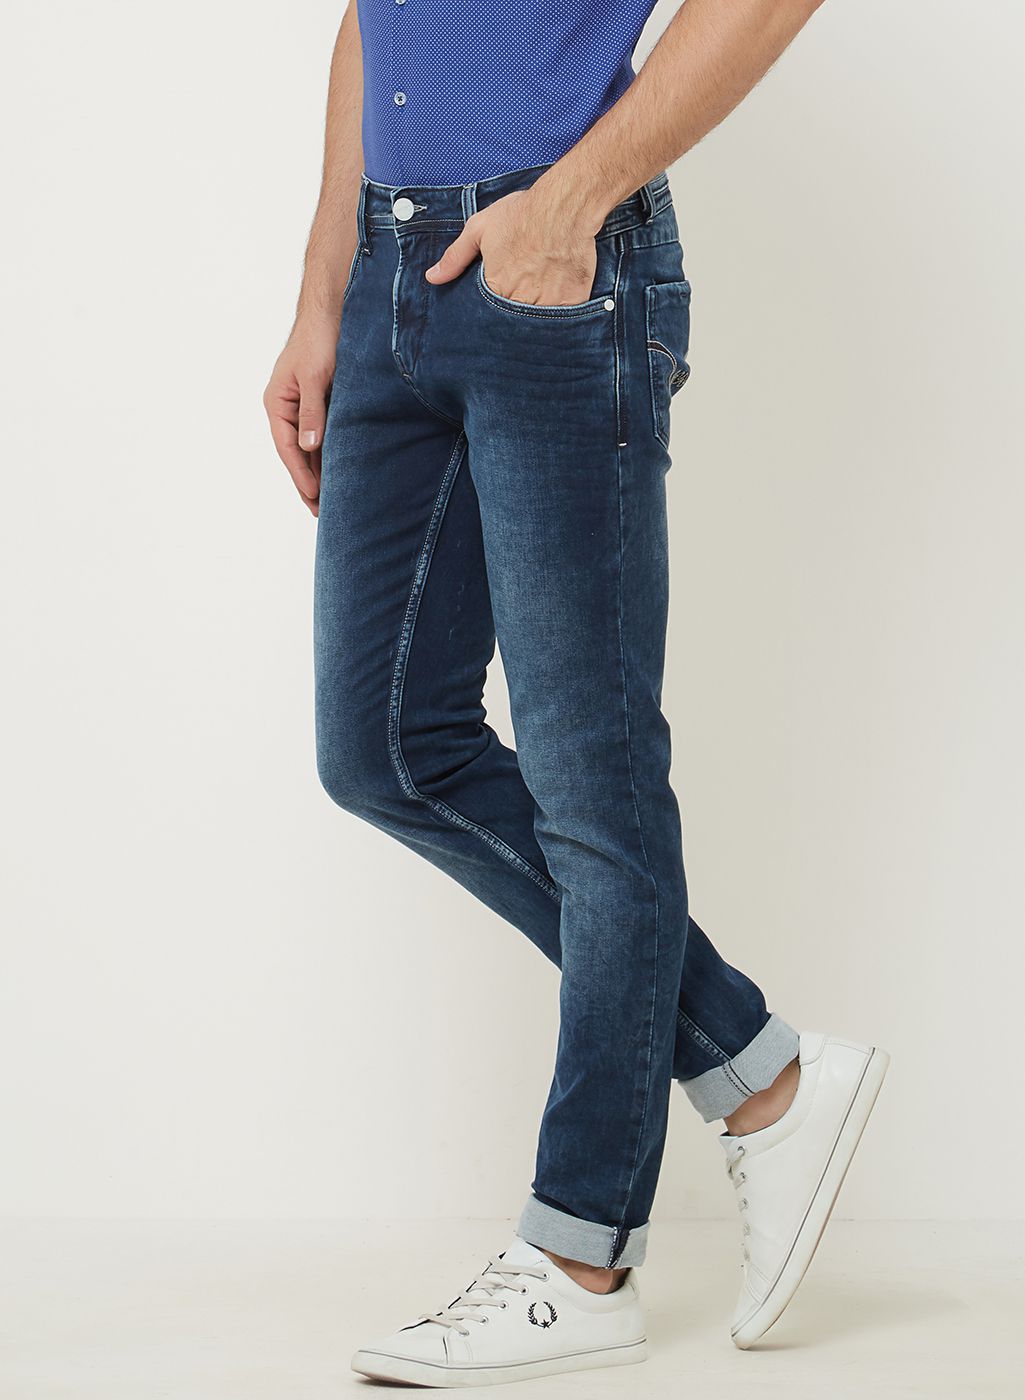 LAWMAN PG3 Blue Slim Jeans - Buy LAWMAN PG3 Blue Slim Jeans Online at ...